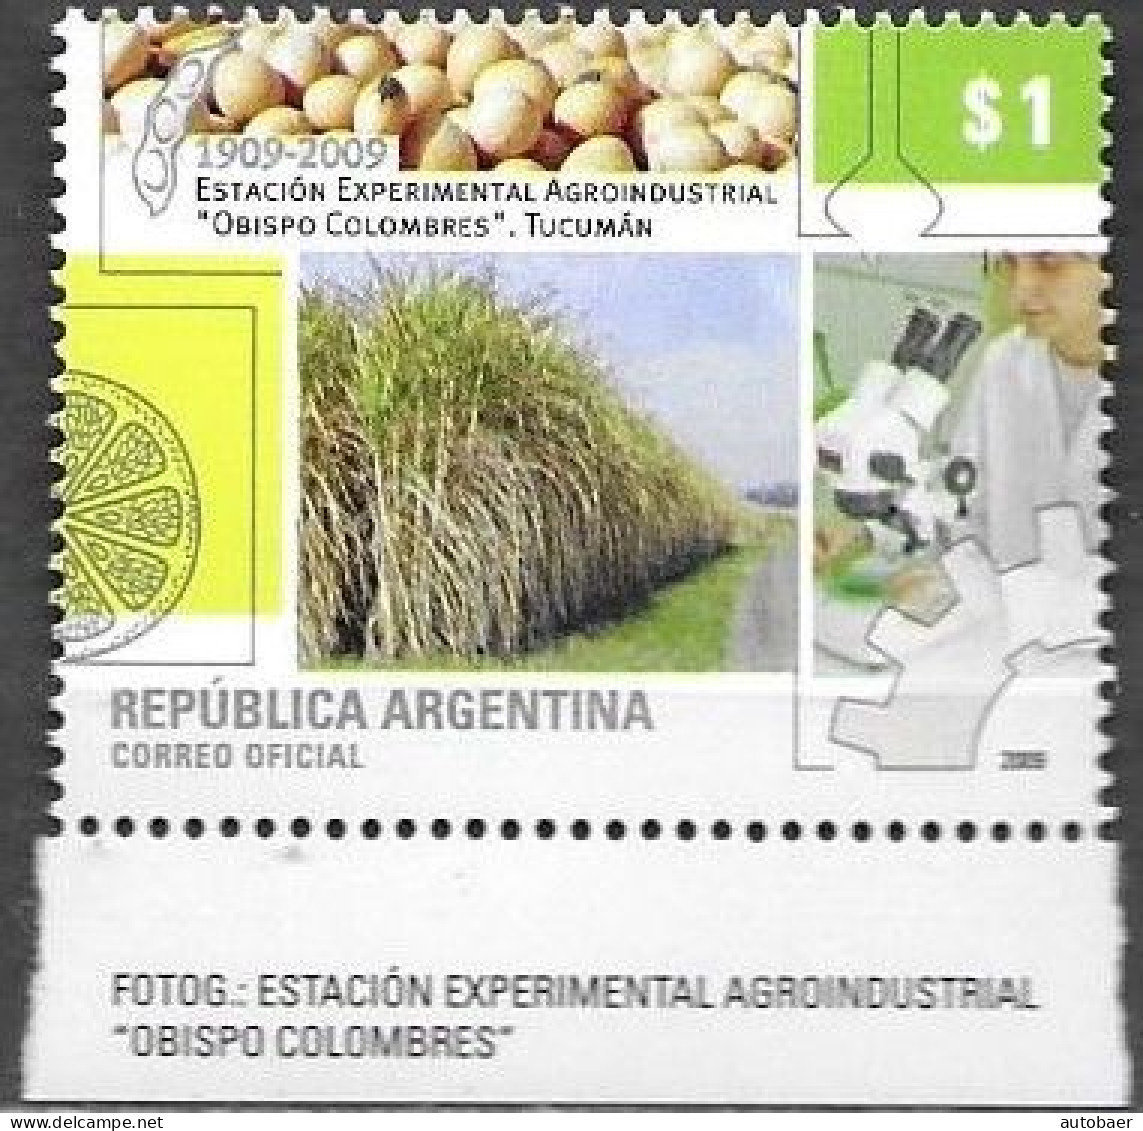 Argentina 2009 Agroindustrial Station Estacion Bishop Obispo Colombres Tucuman Michel 3254 MNH Postfrisch Neuf ** - Nuovi